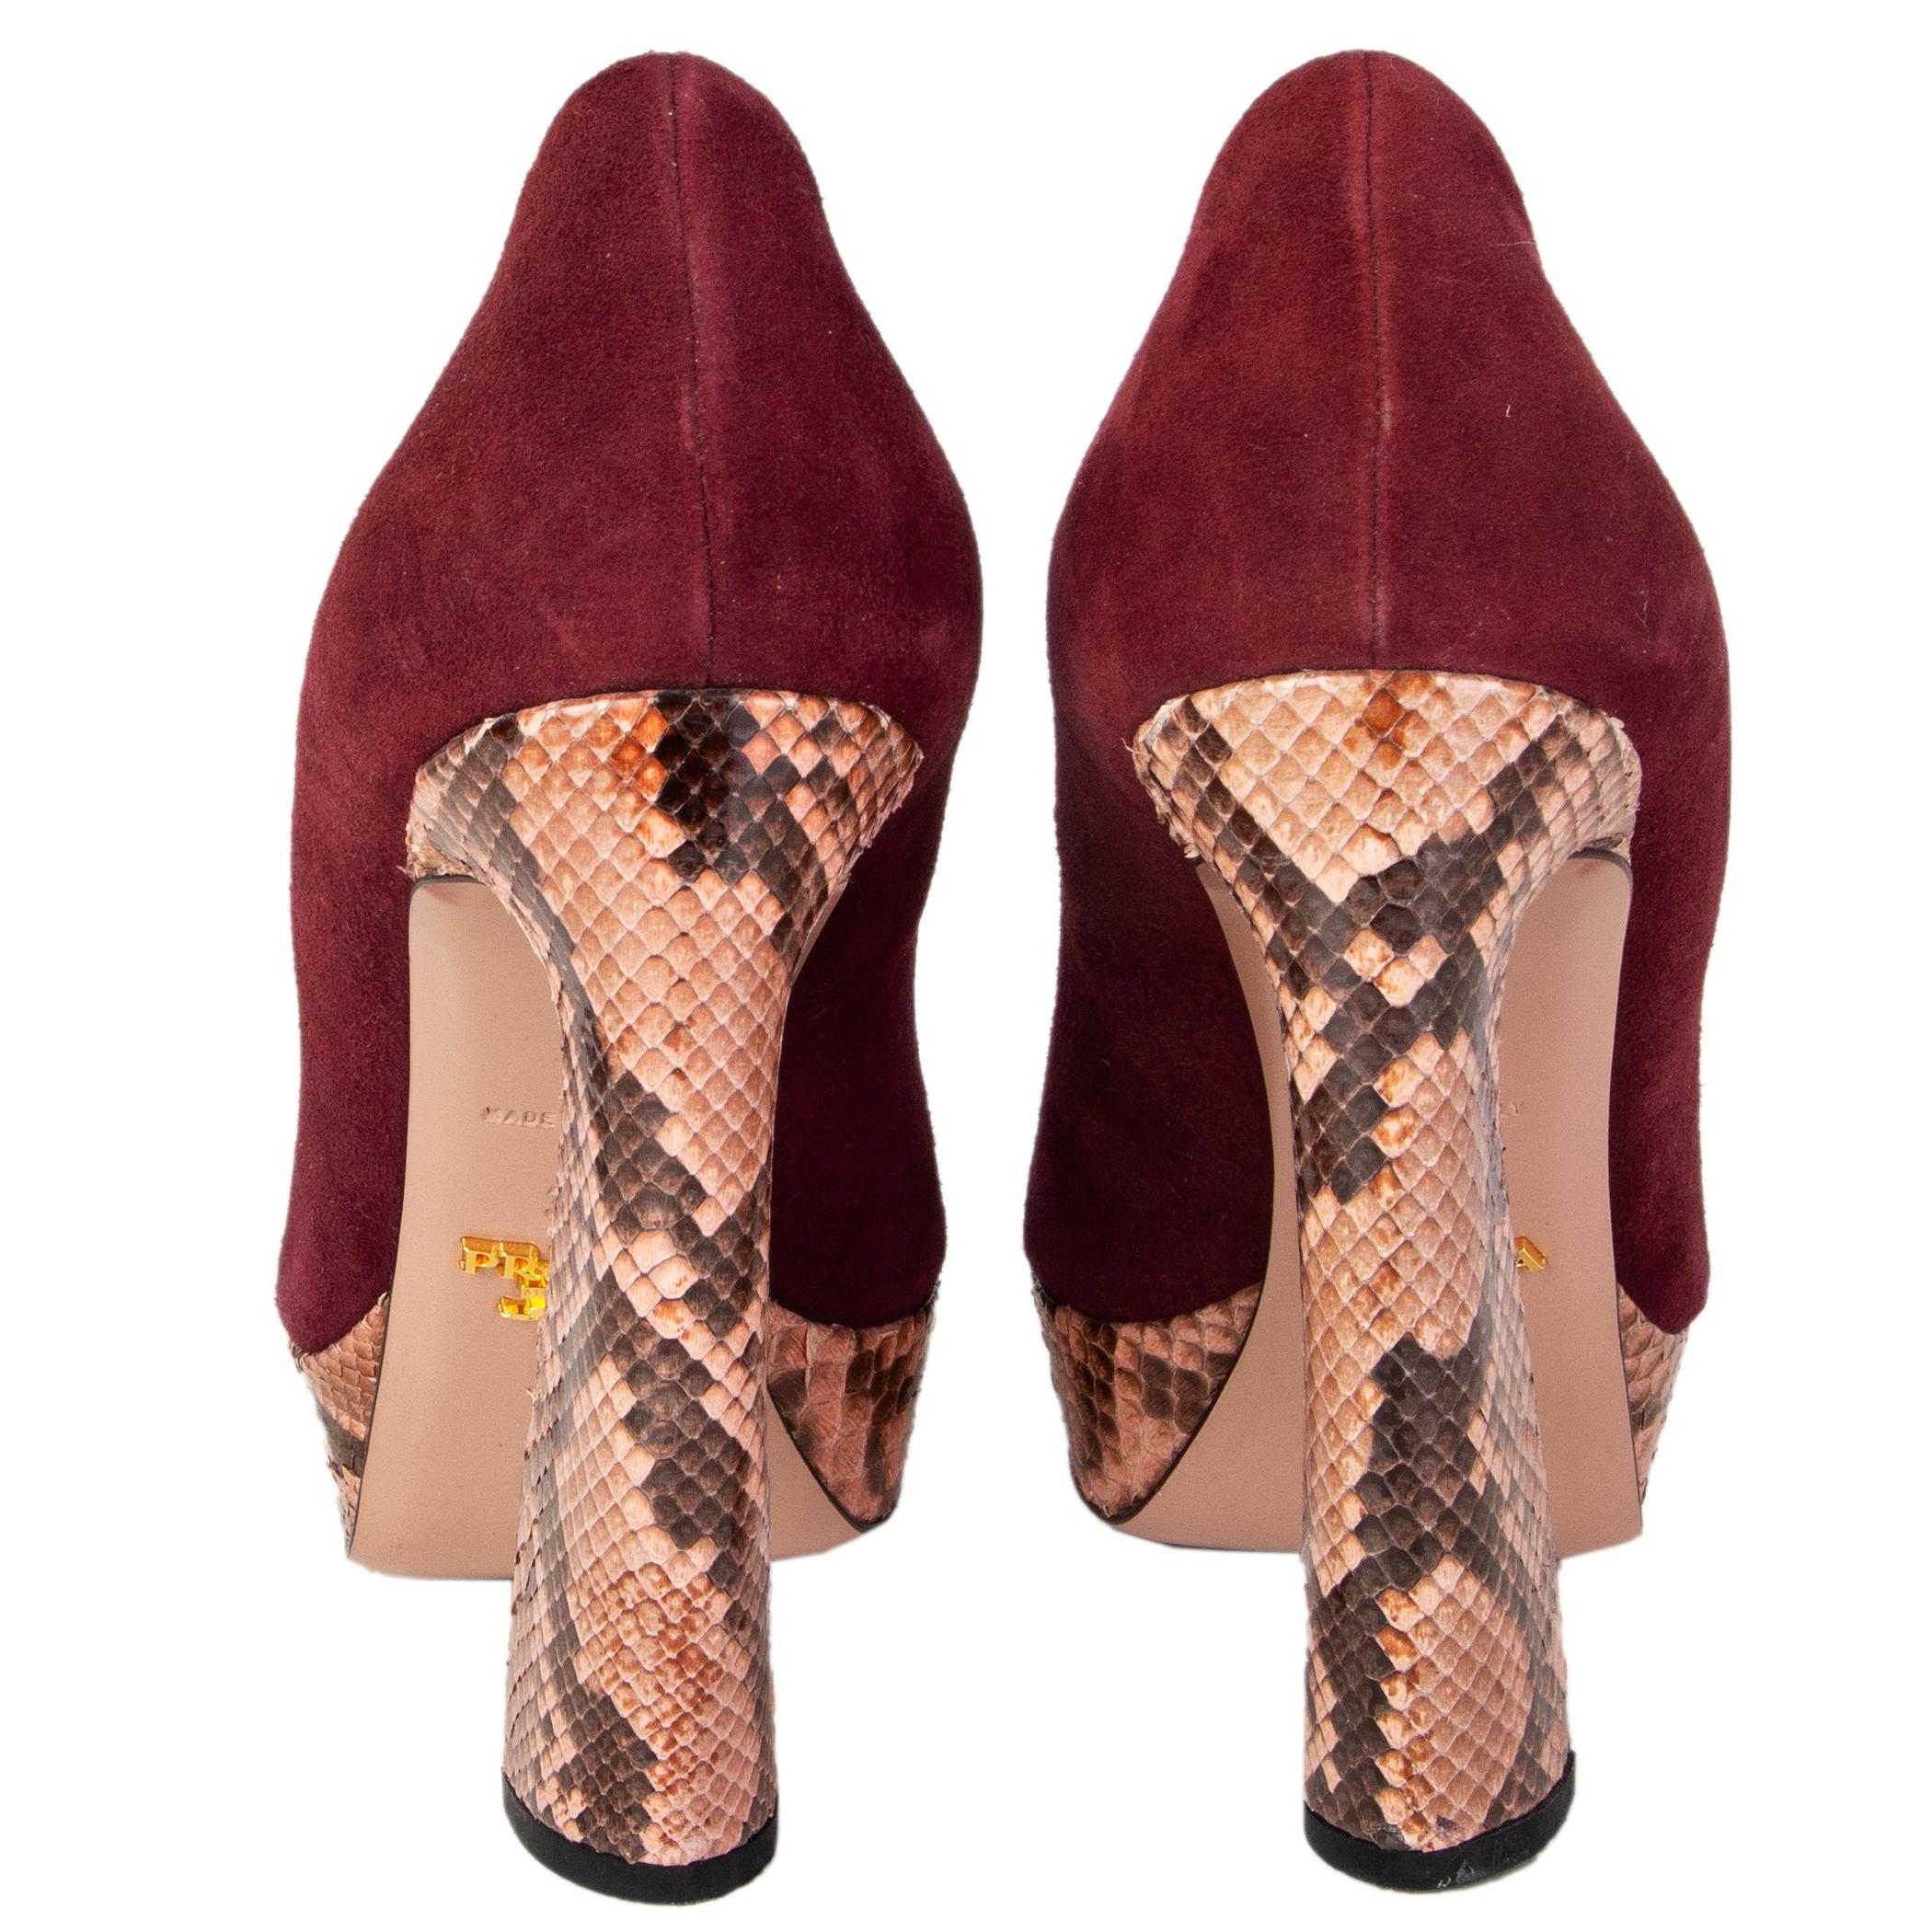 PRADA burgundy suede PYTHON PLATFORM Pumps Shoes 36 In Excellent Condition For Sale In Zürich, CH